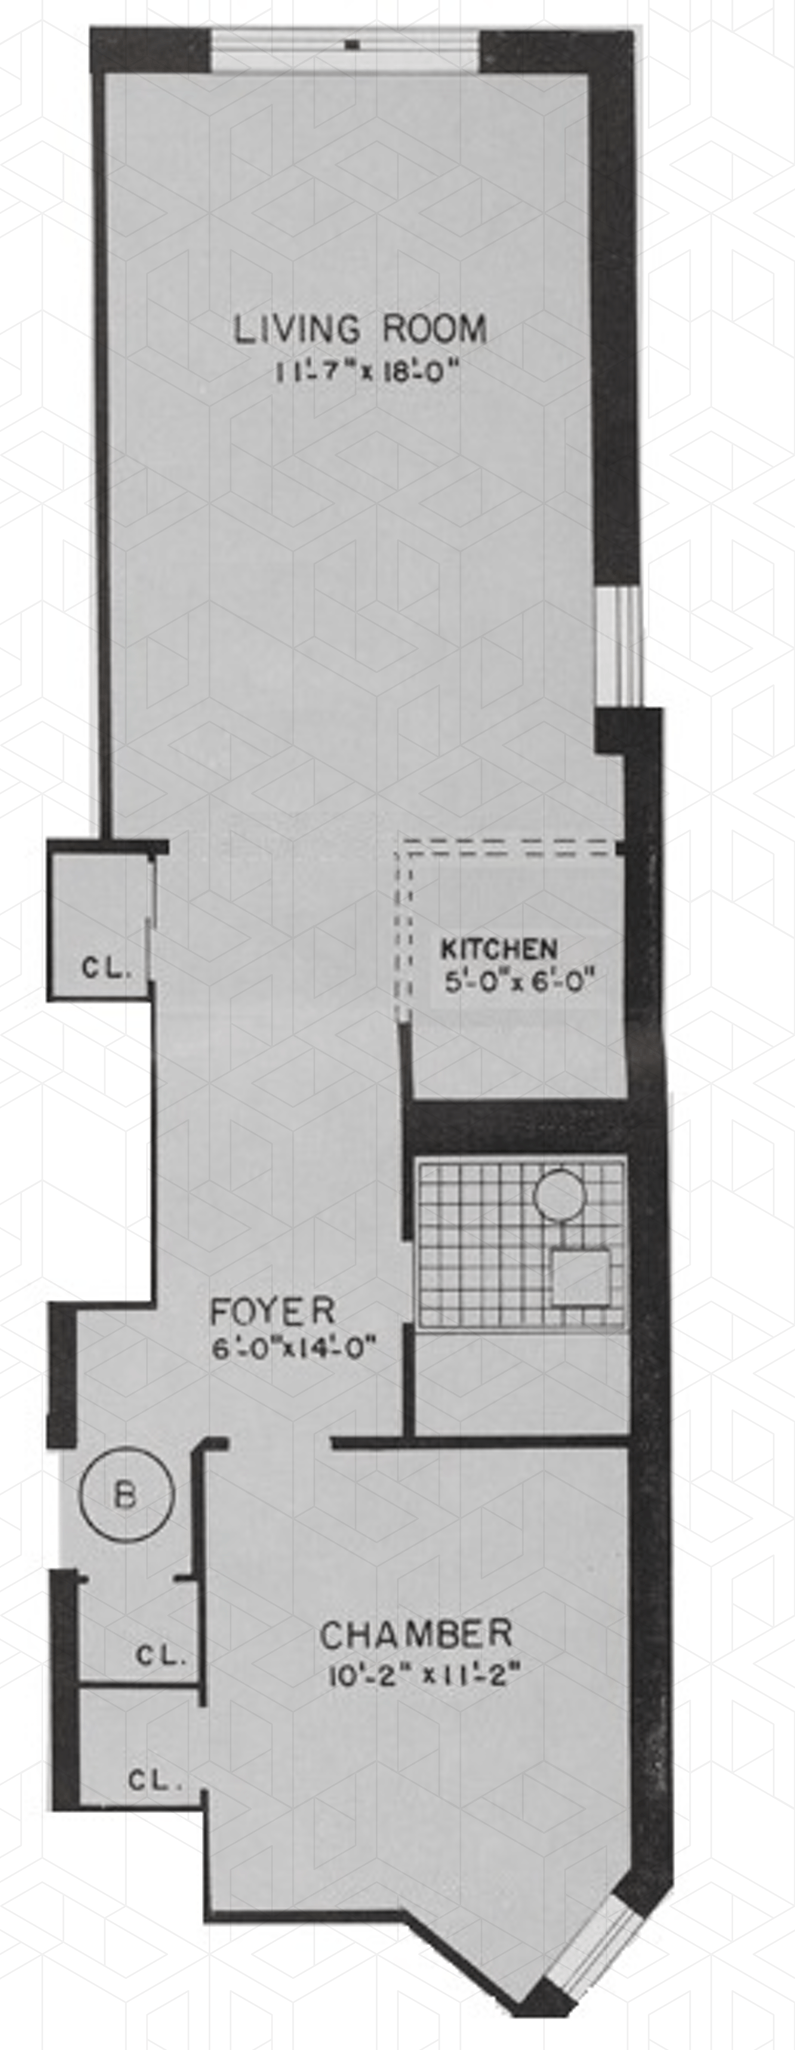 Floorplan for 534 East 88th Street, 4B